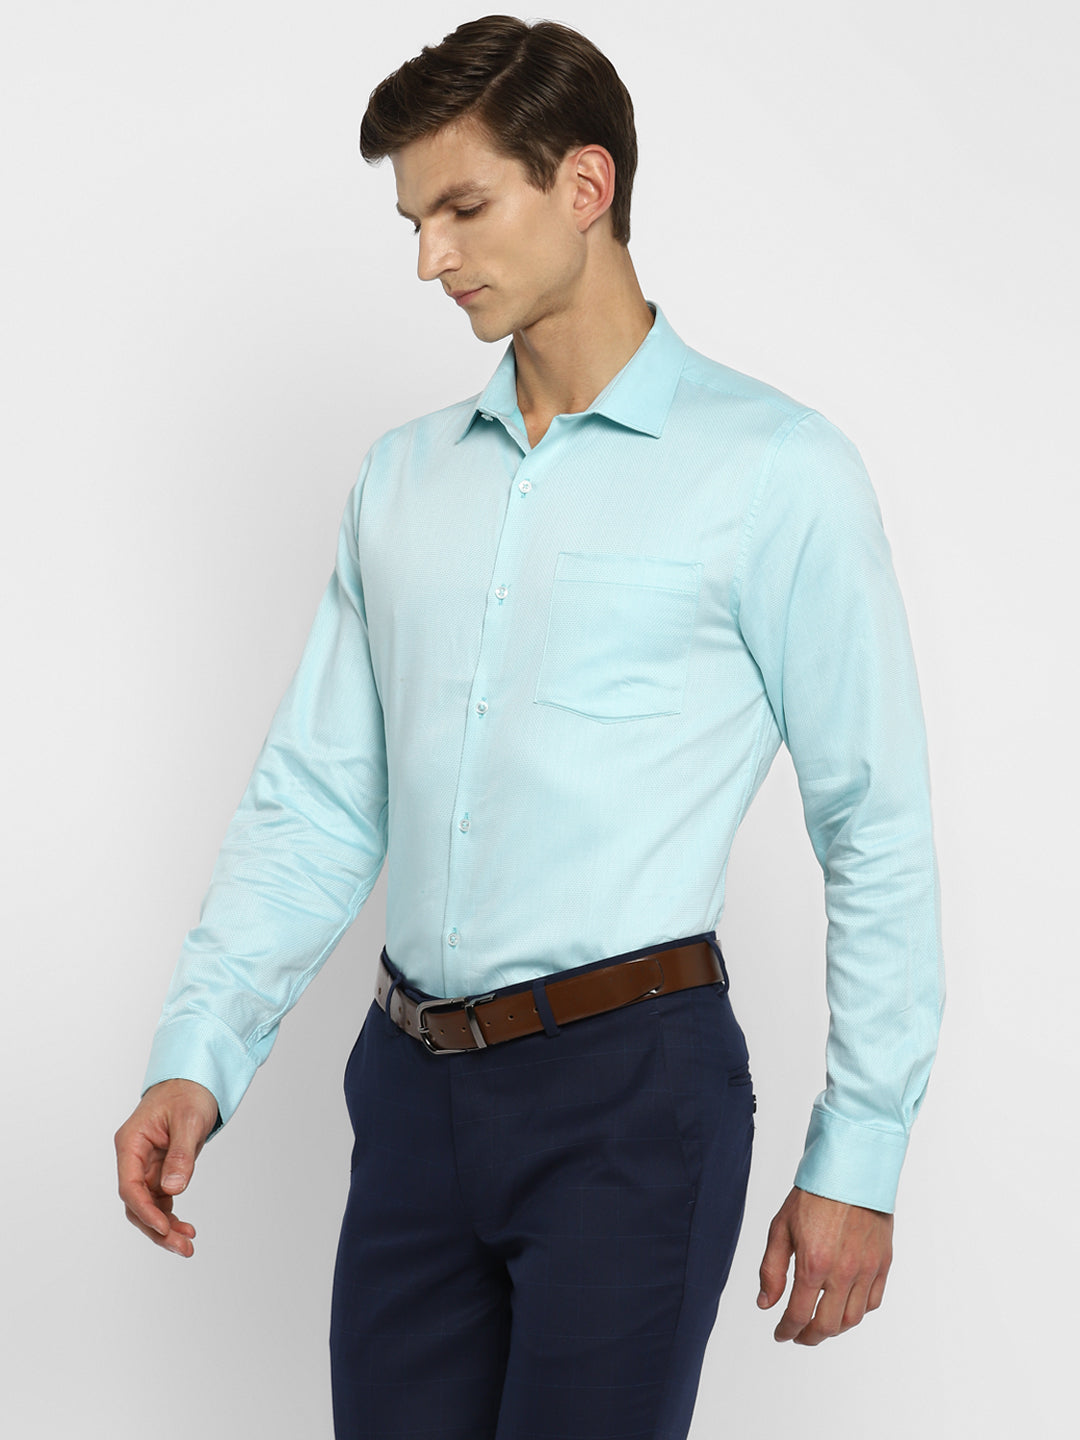 Turquoise Blue Cotton Self Design Slim Fit Shirts